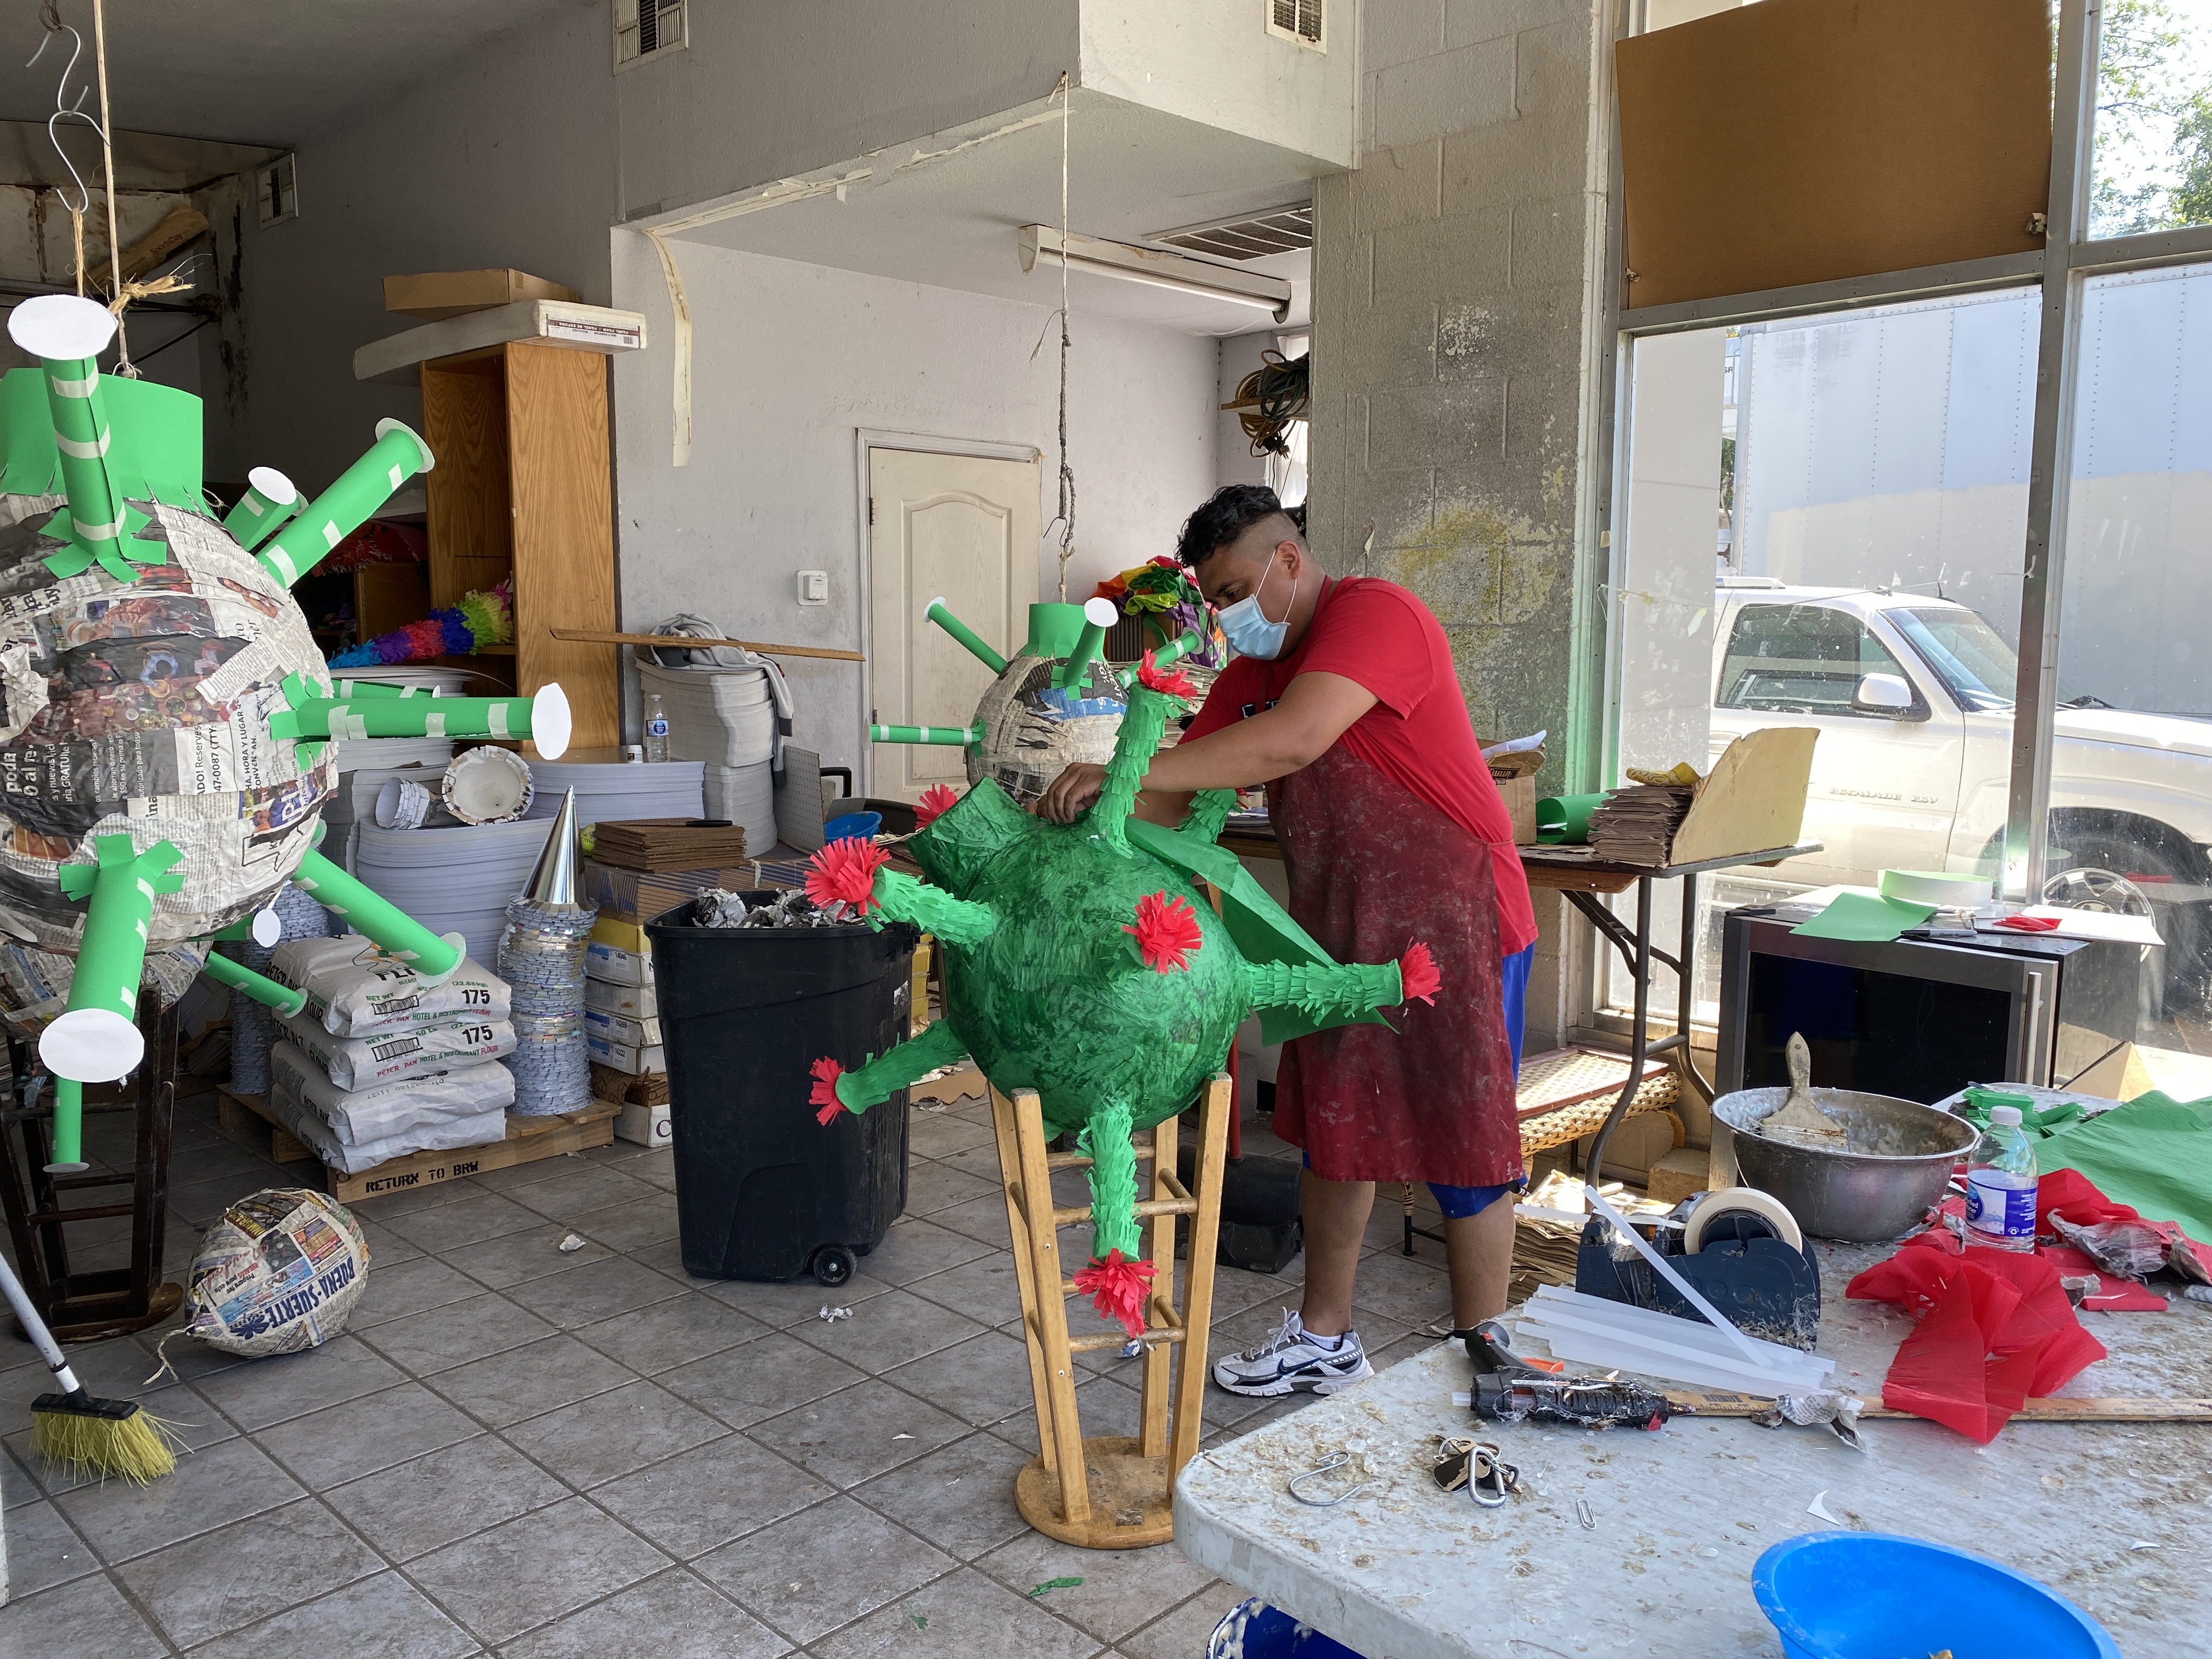 Coronavirus Piñatas are Big Business for Store That Reopens